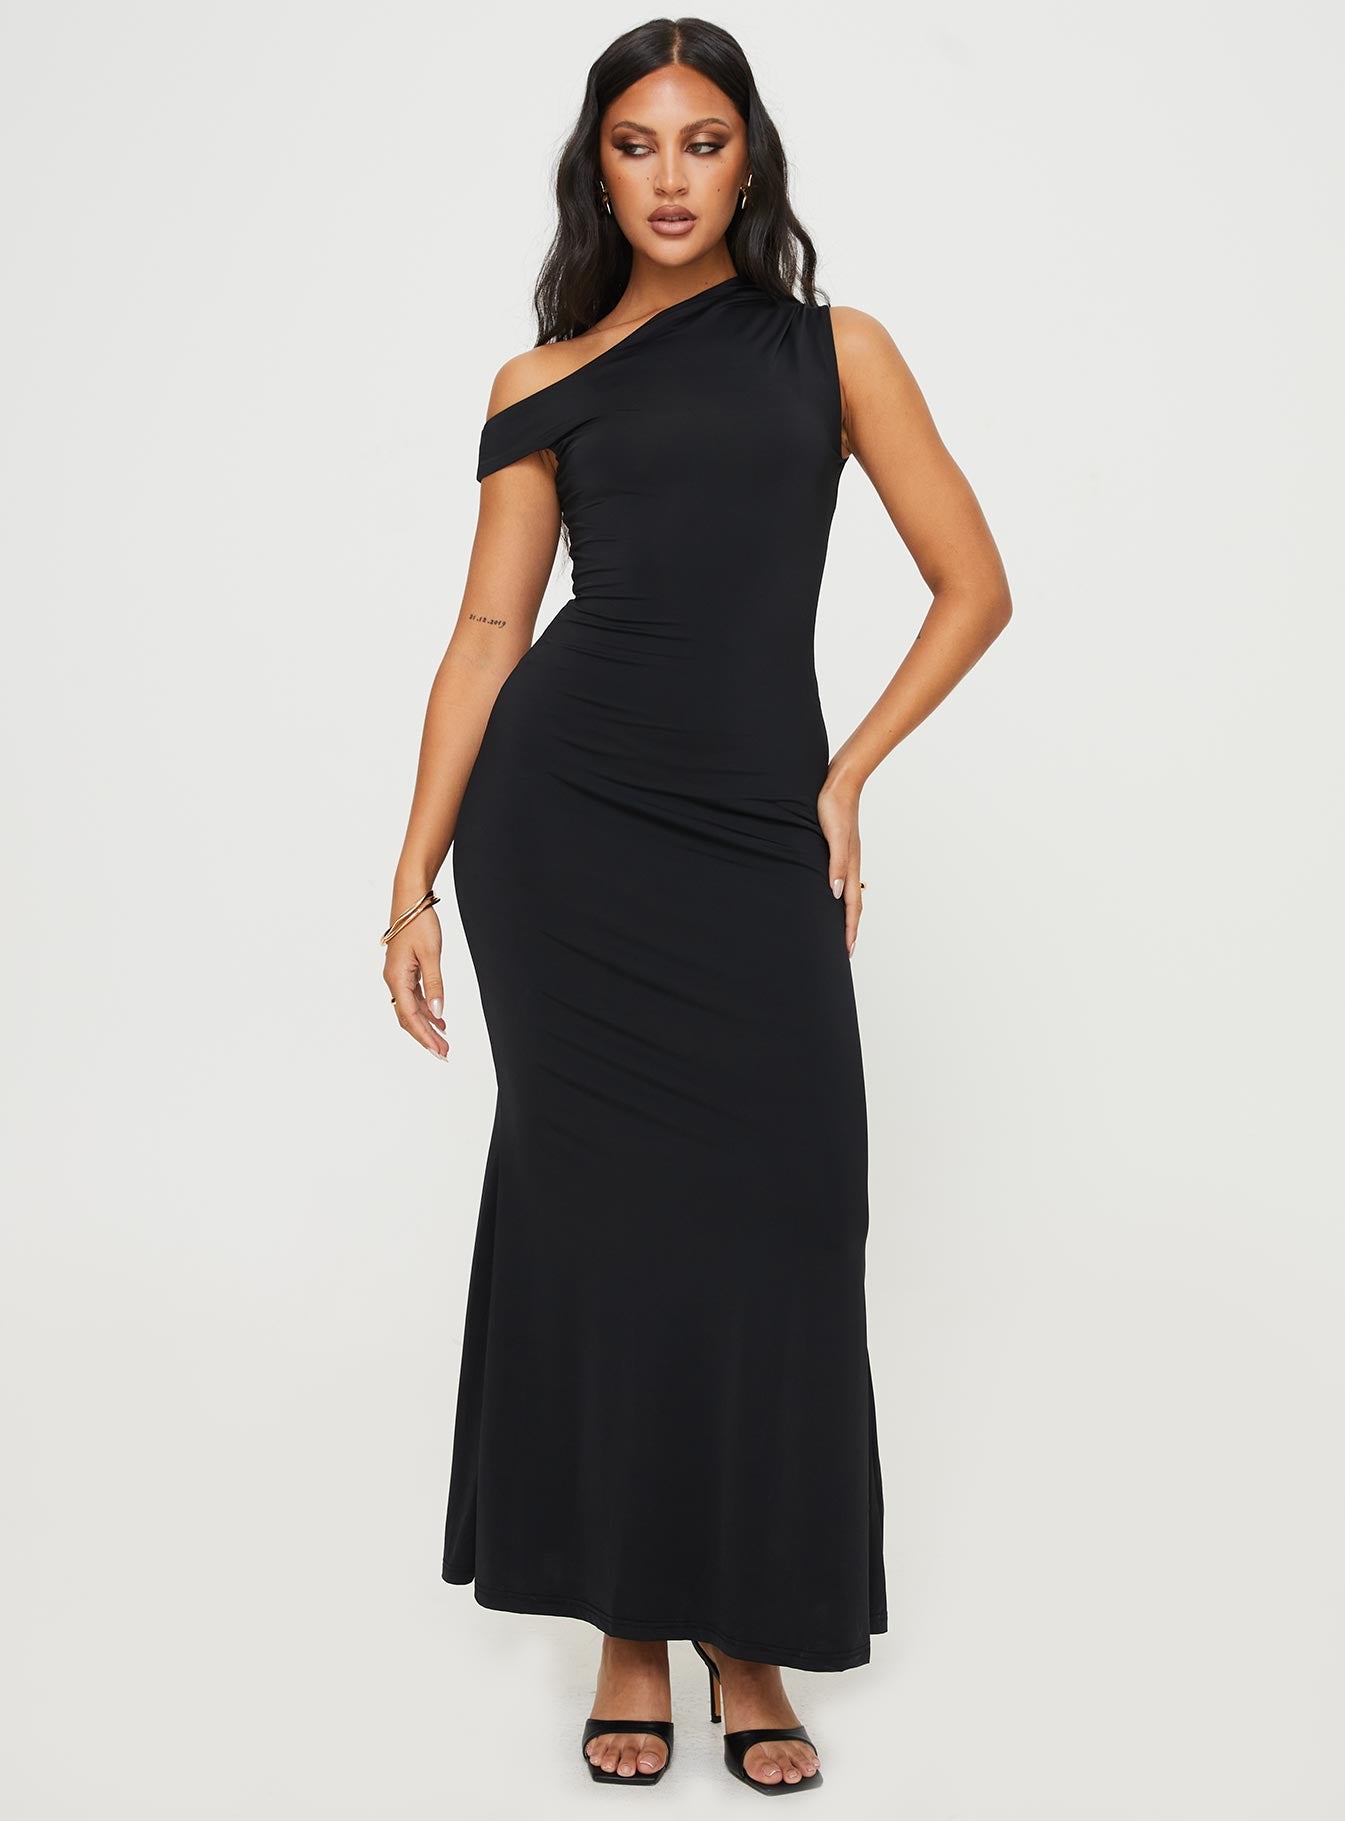 Shop Formal Dress - Beller Maxi Dress Black sixth image